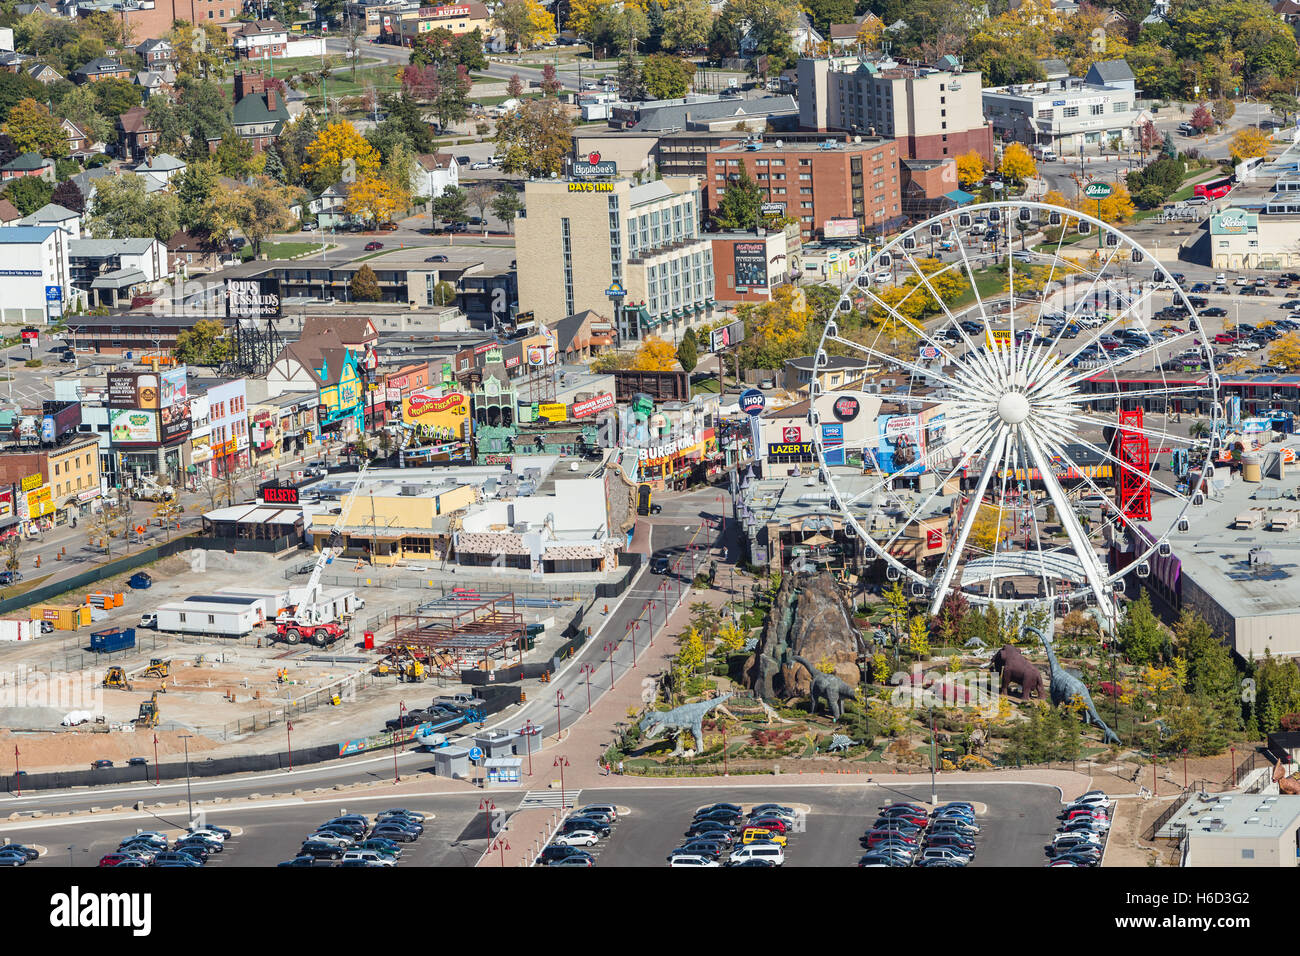 Vue aérienne du quartier de Clifton Hill Niagara Falls, Ontario, Canada. Banque D'Images